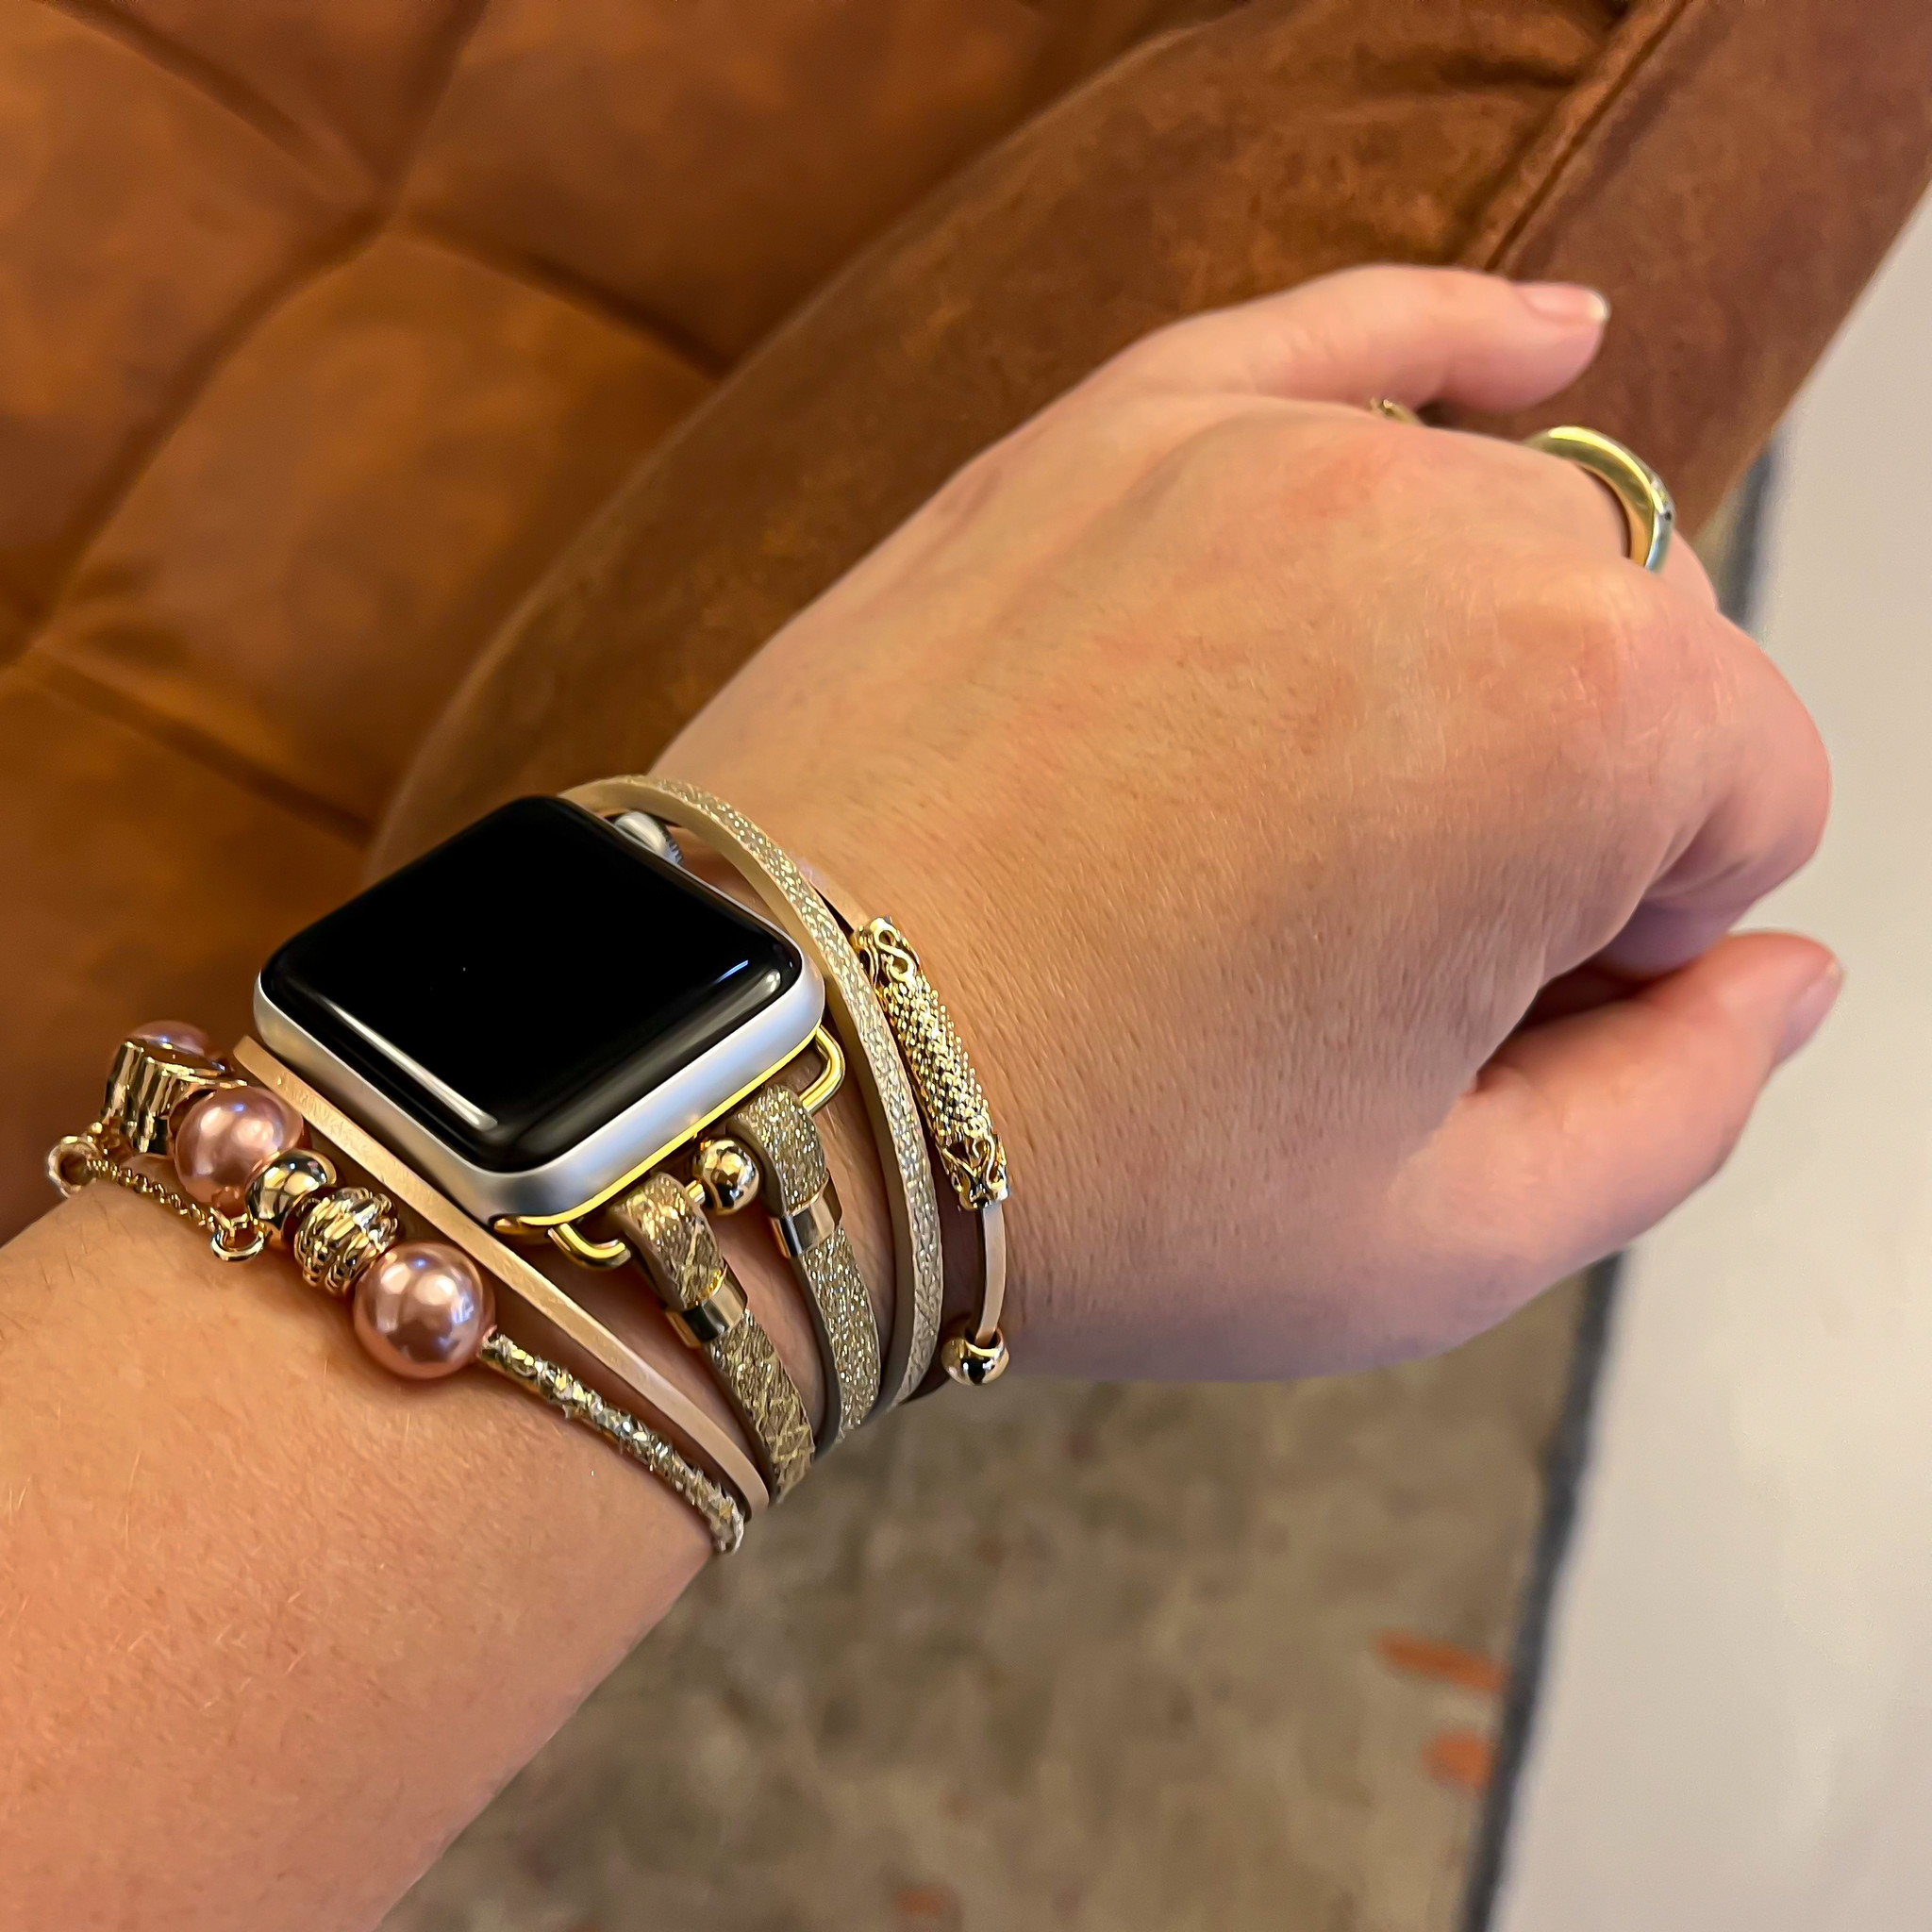 Apple Watch Jewellery Strap – Liz Gold Glitter